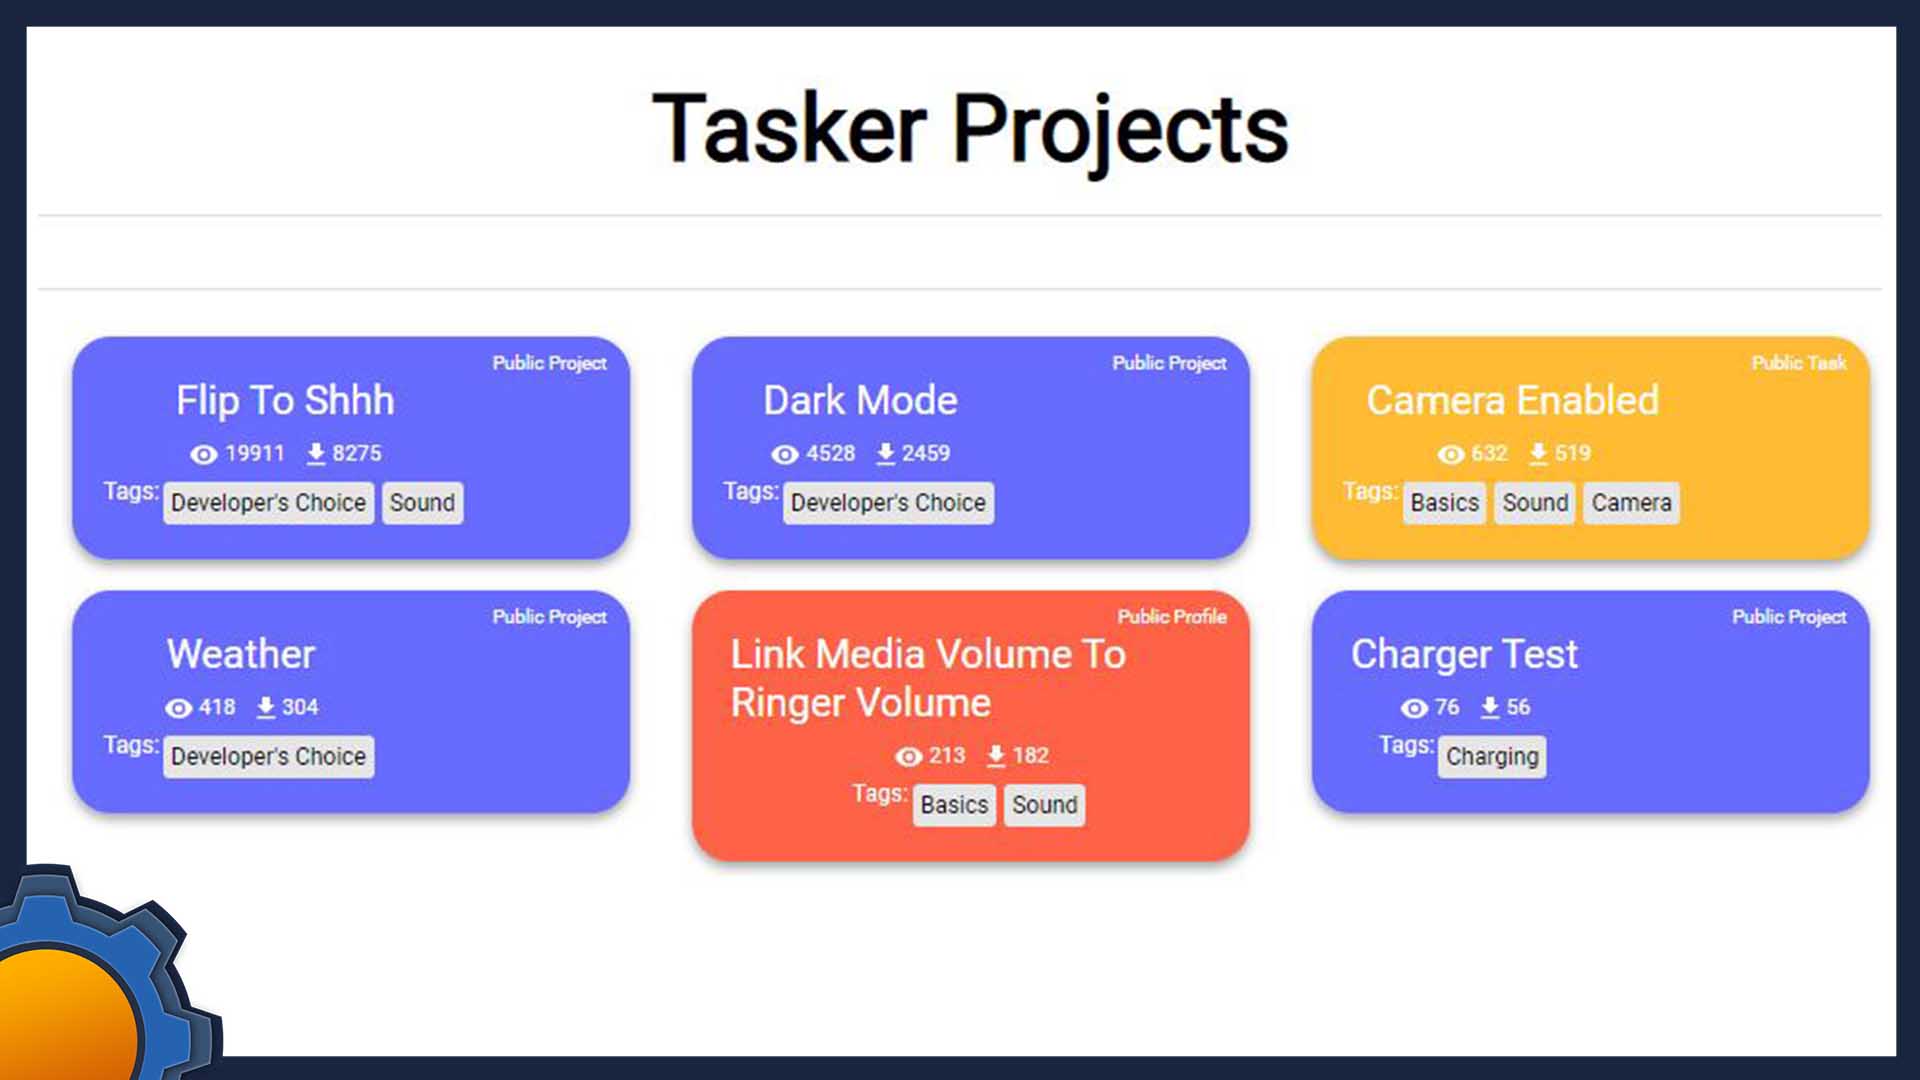 TaskerNet is great! NotEnoughTech